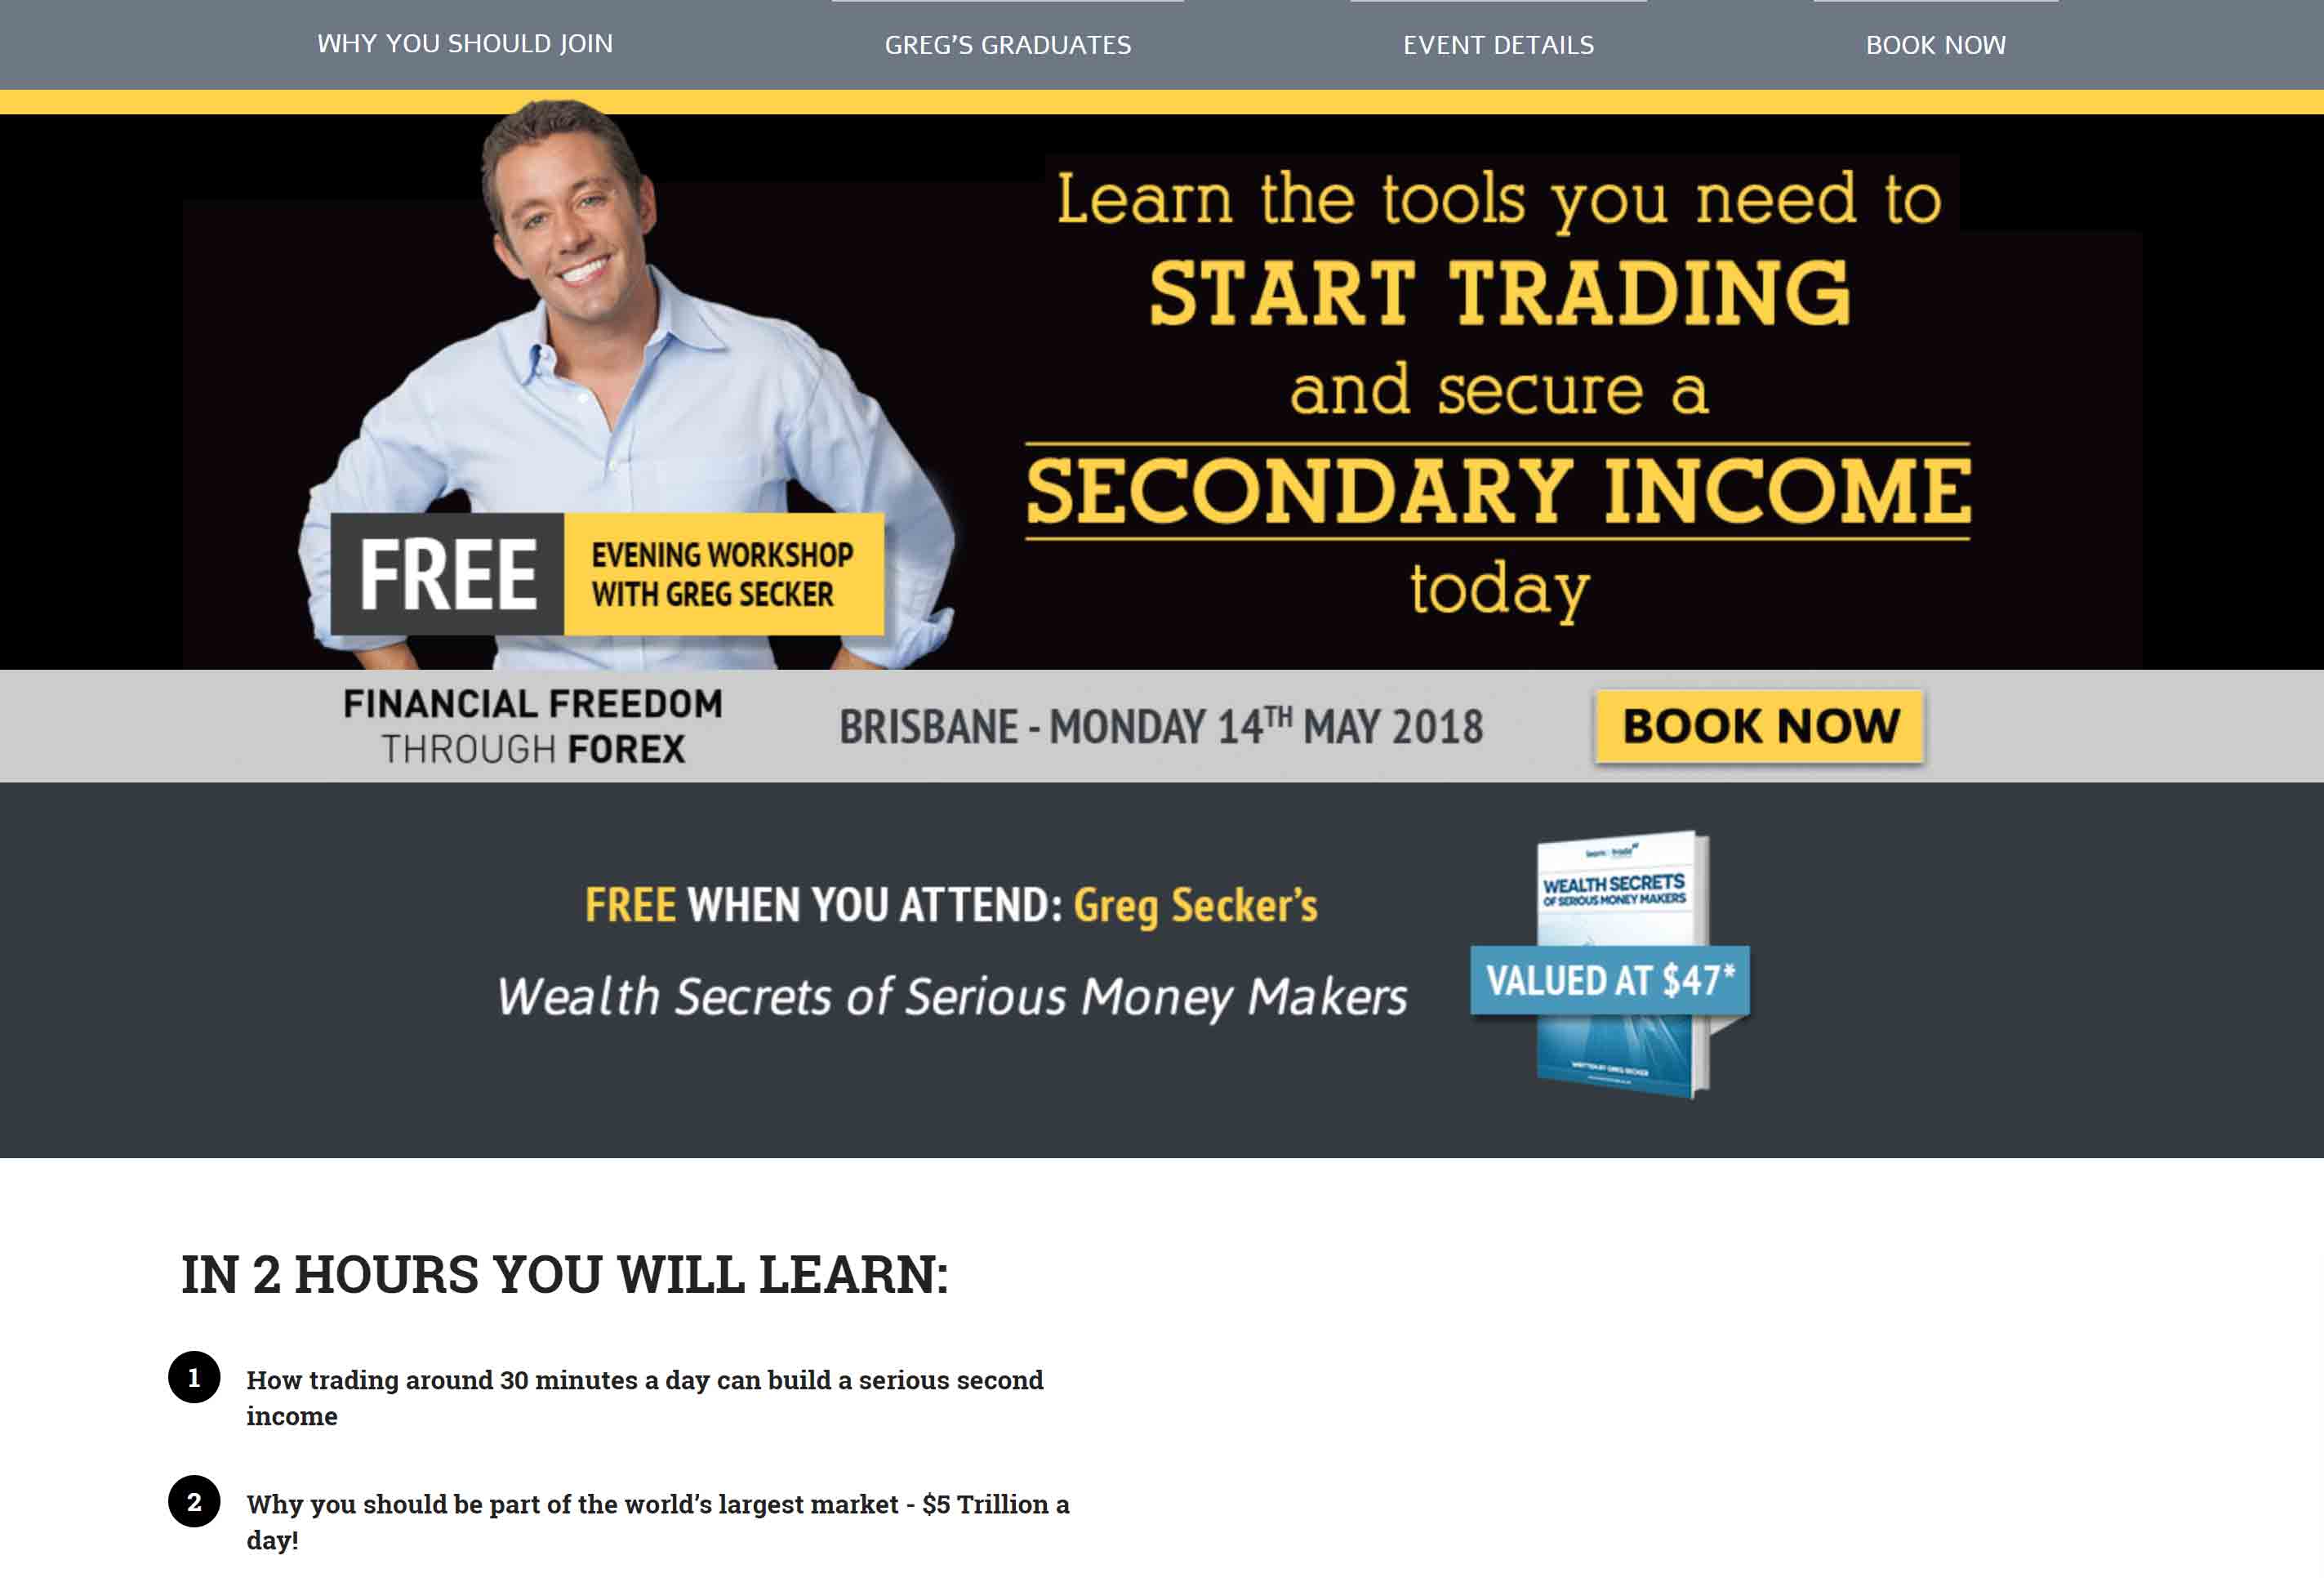 Greg Secker's Wealth Secrets of Serious Money Makers